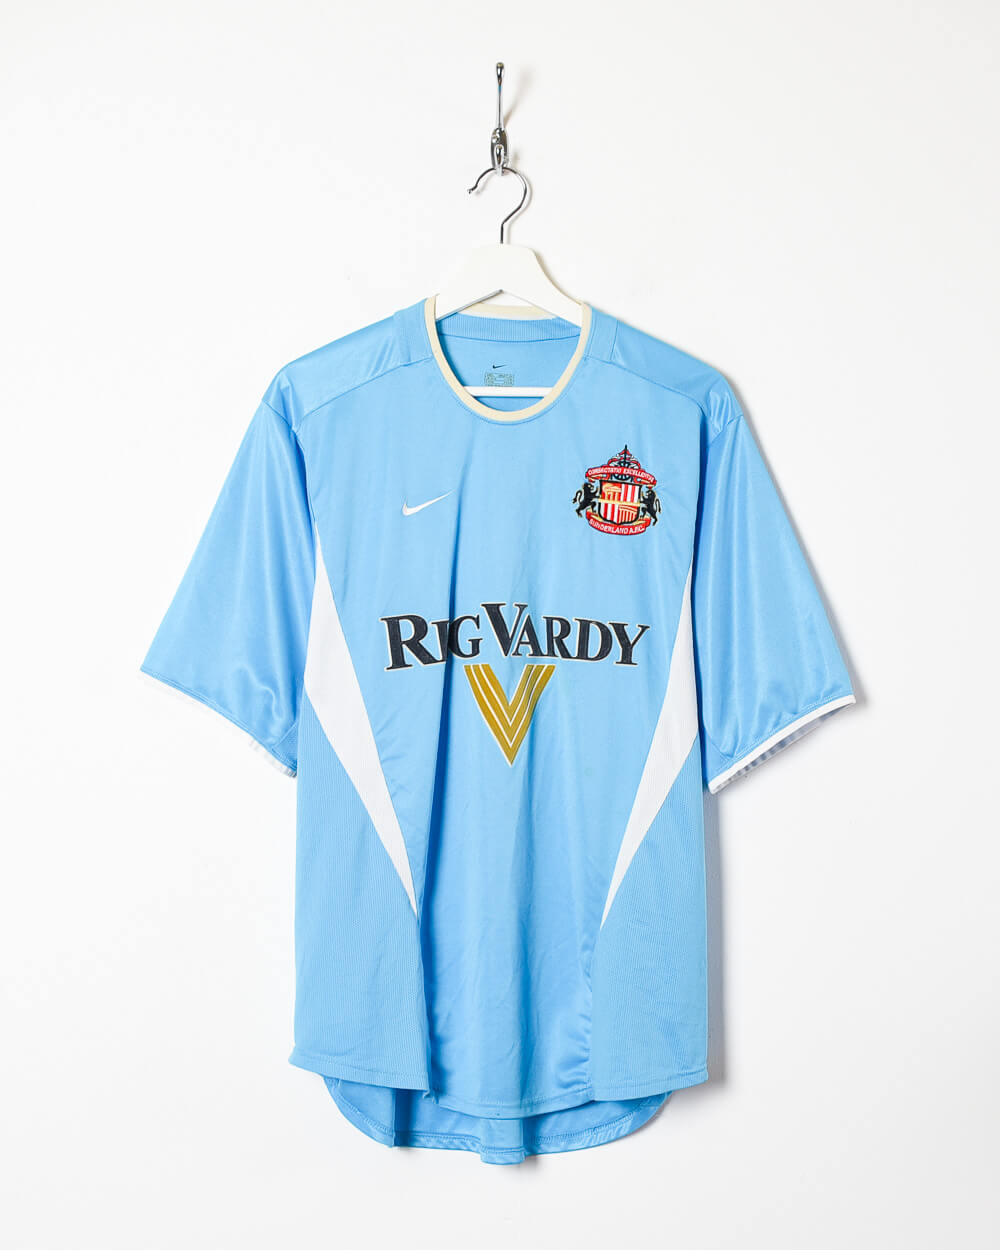 Baby Nike Sunderland 2002/03 Away Football Shirt - Large